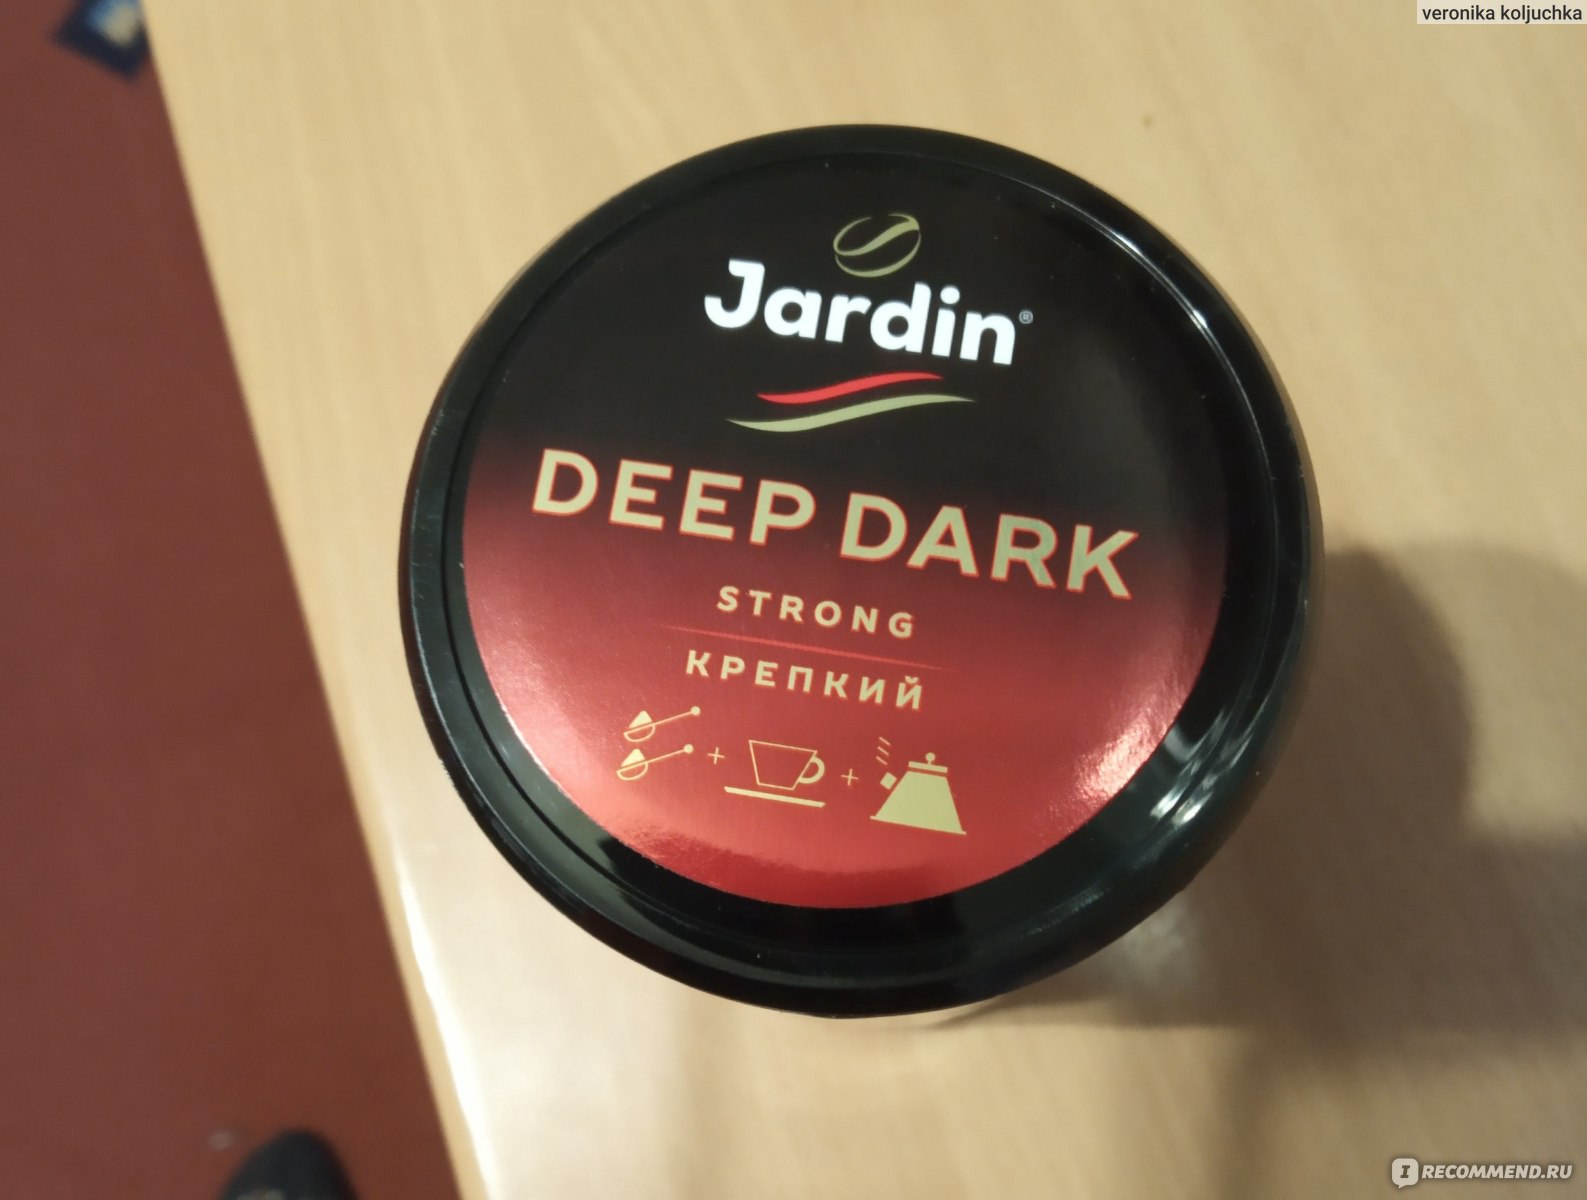 Jardin Deep Dark